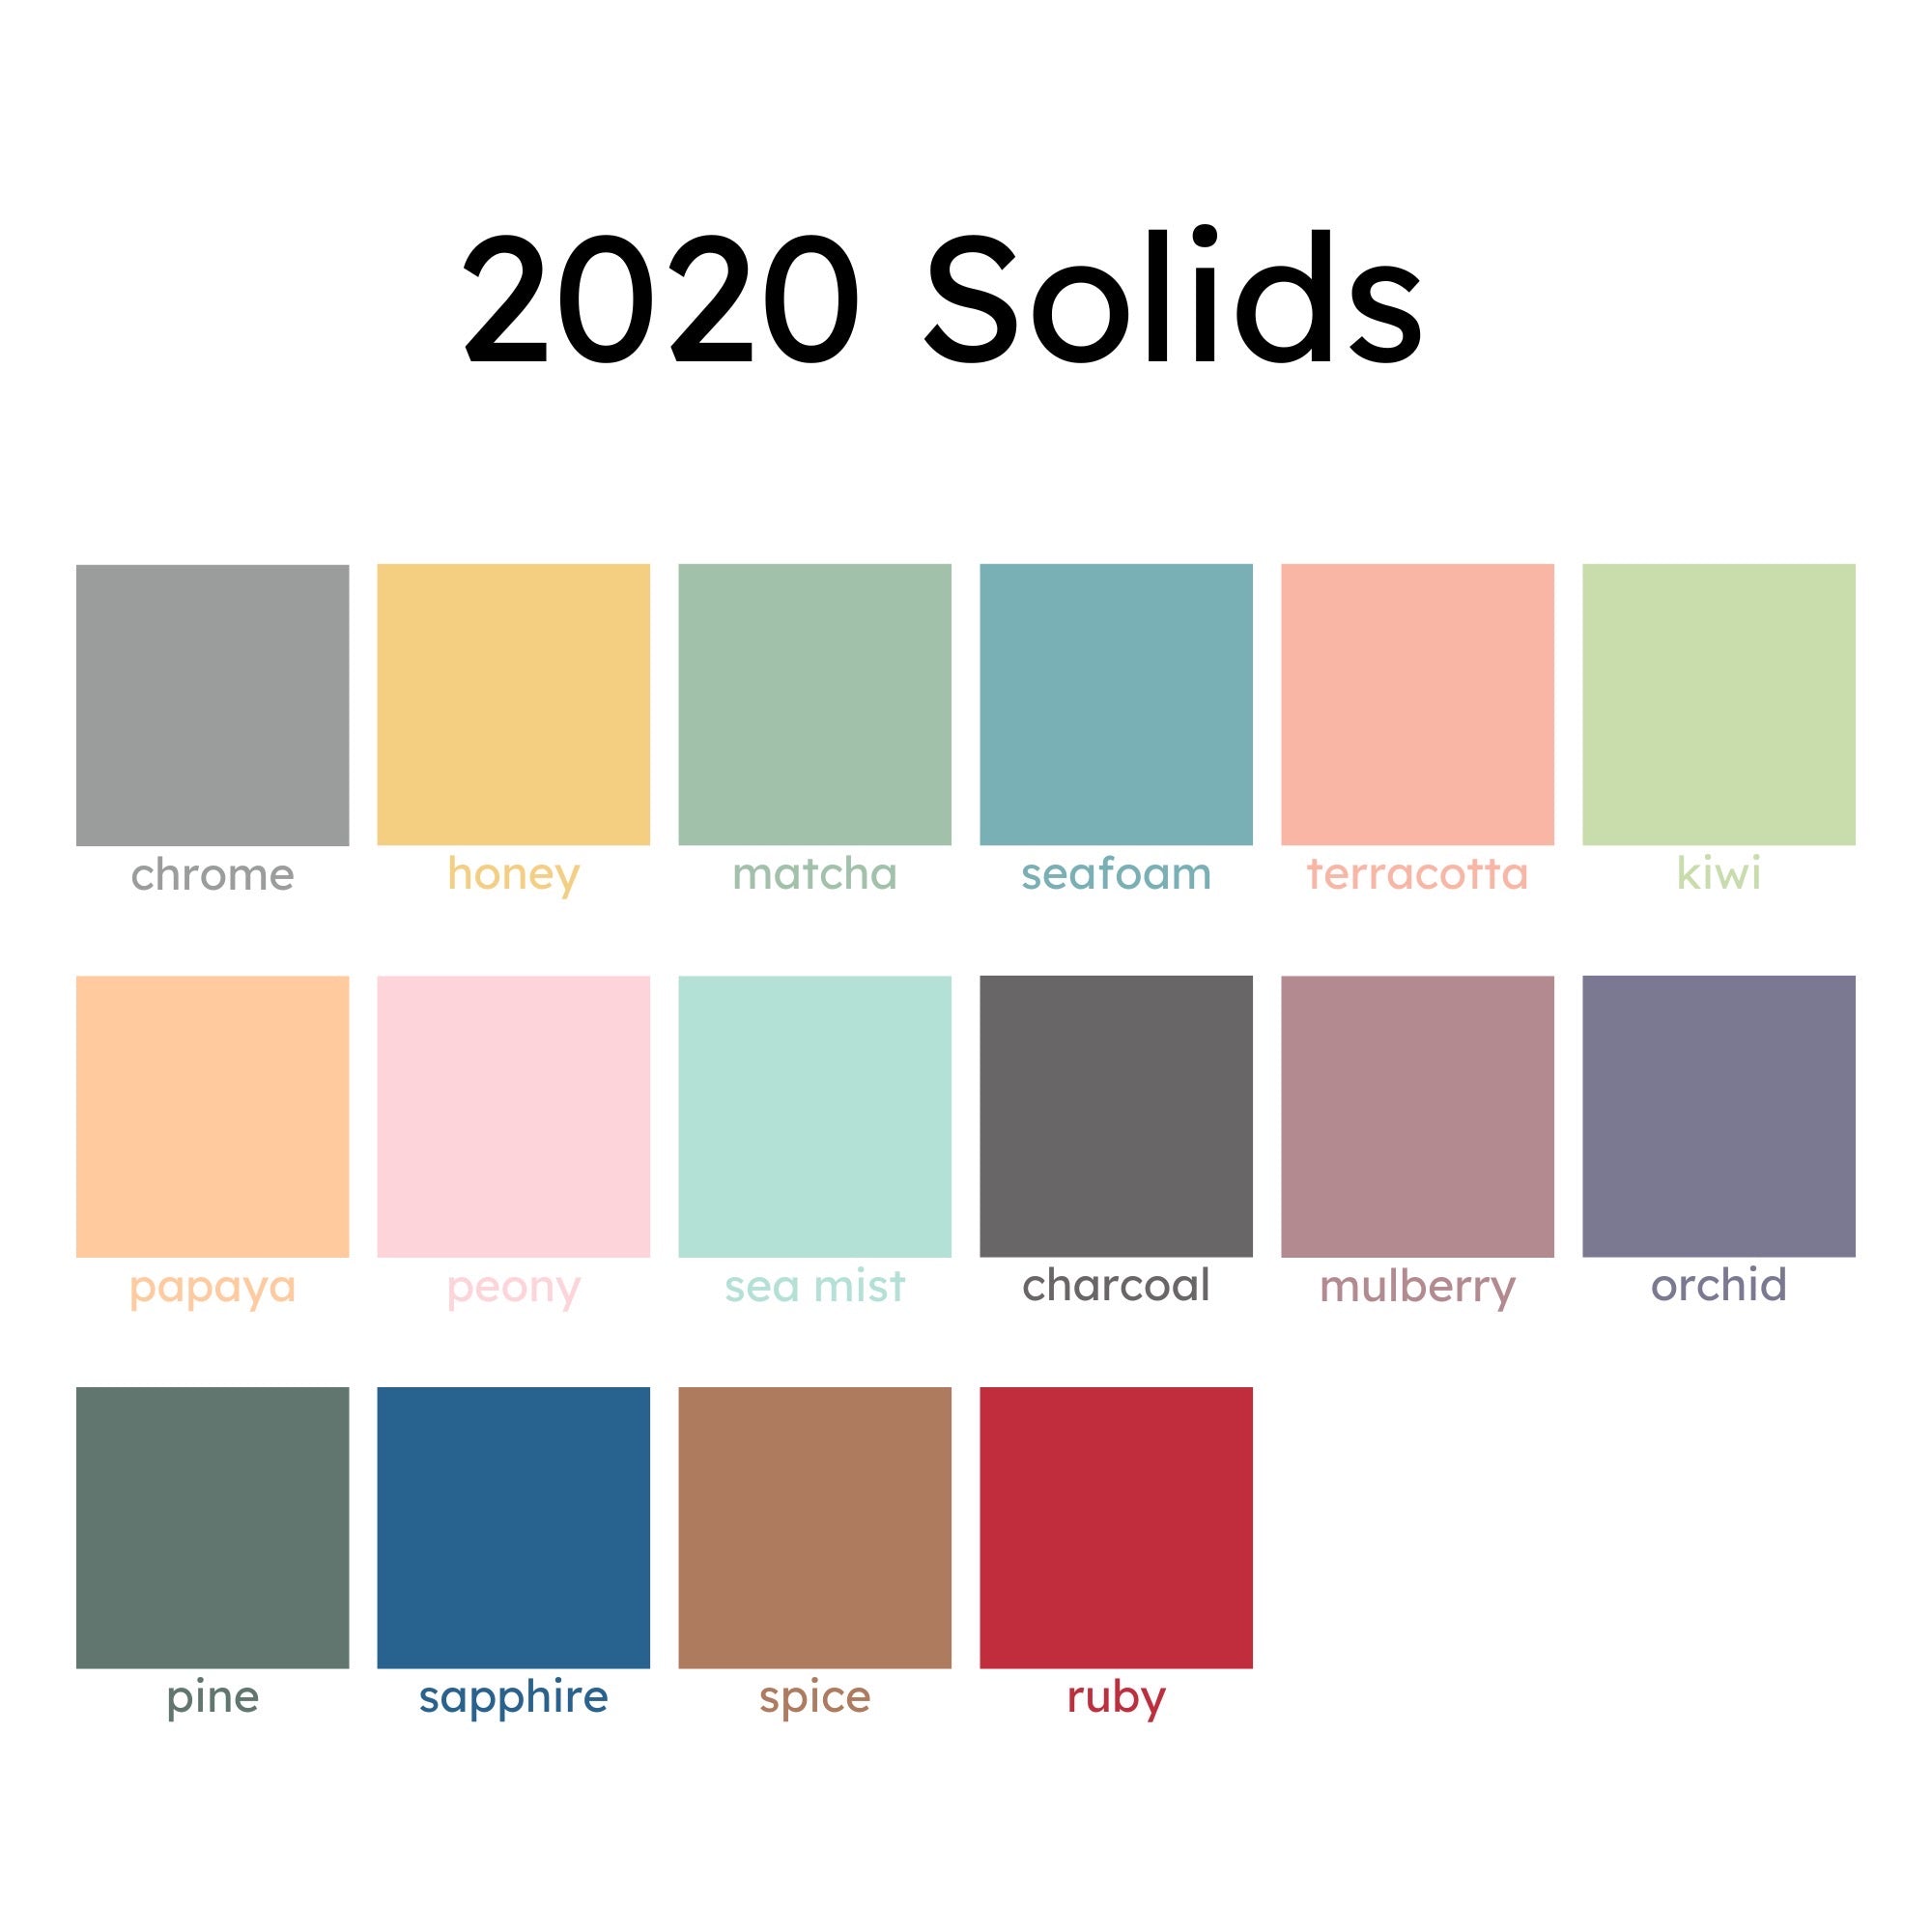 2020 solids